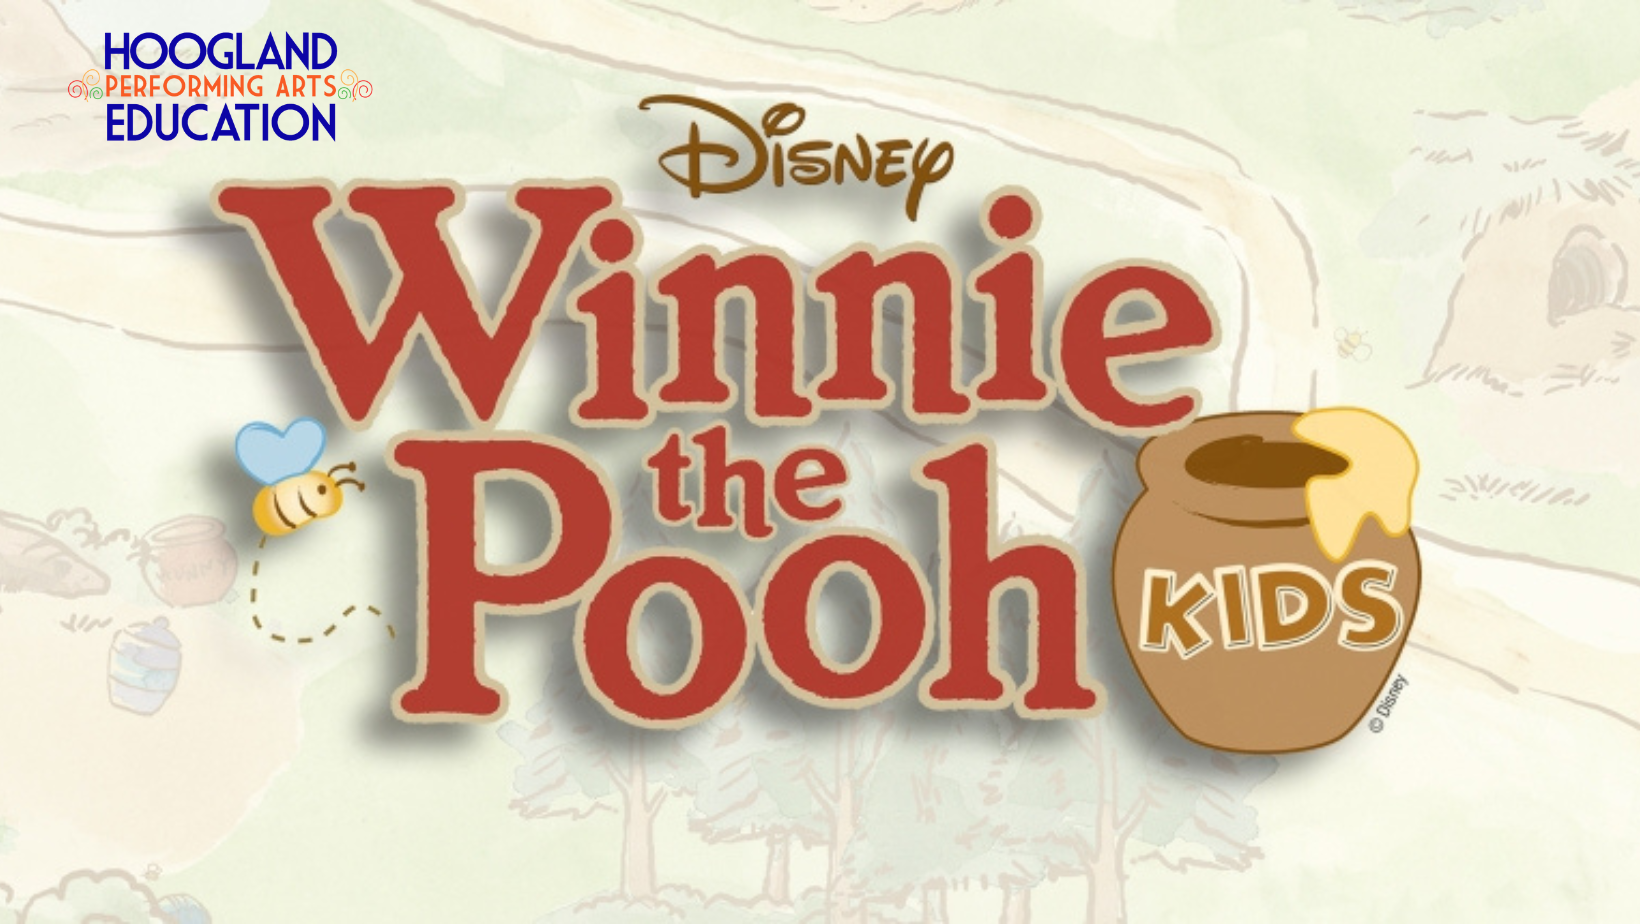 Hoogland Education presents Disney's Winnie the Pooh Kids